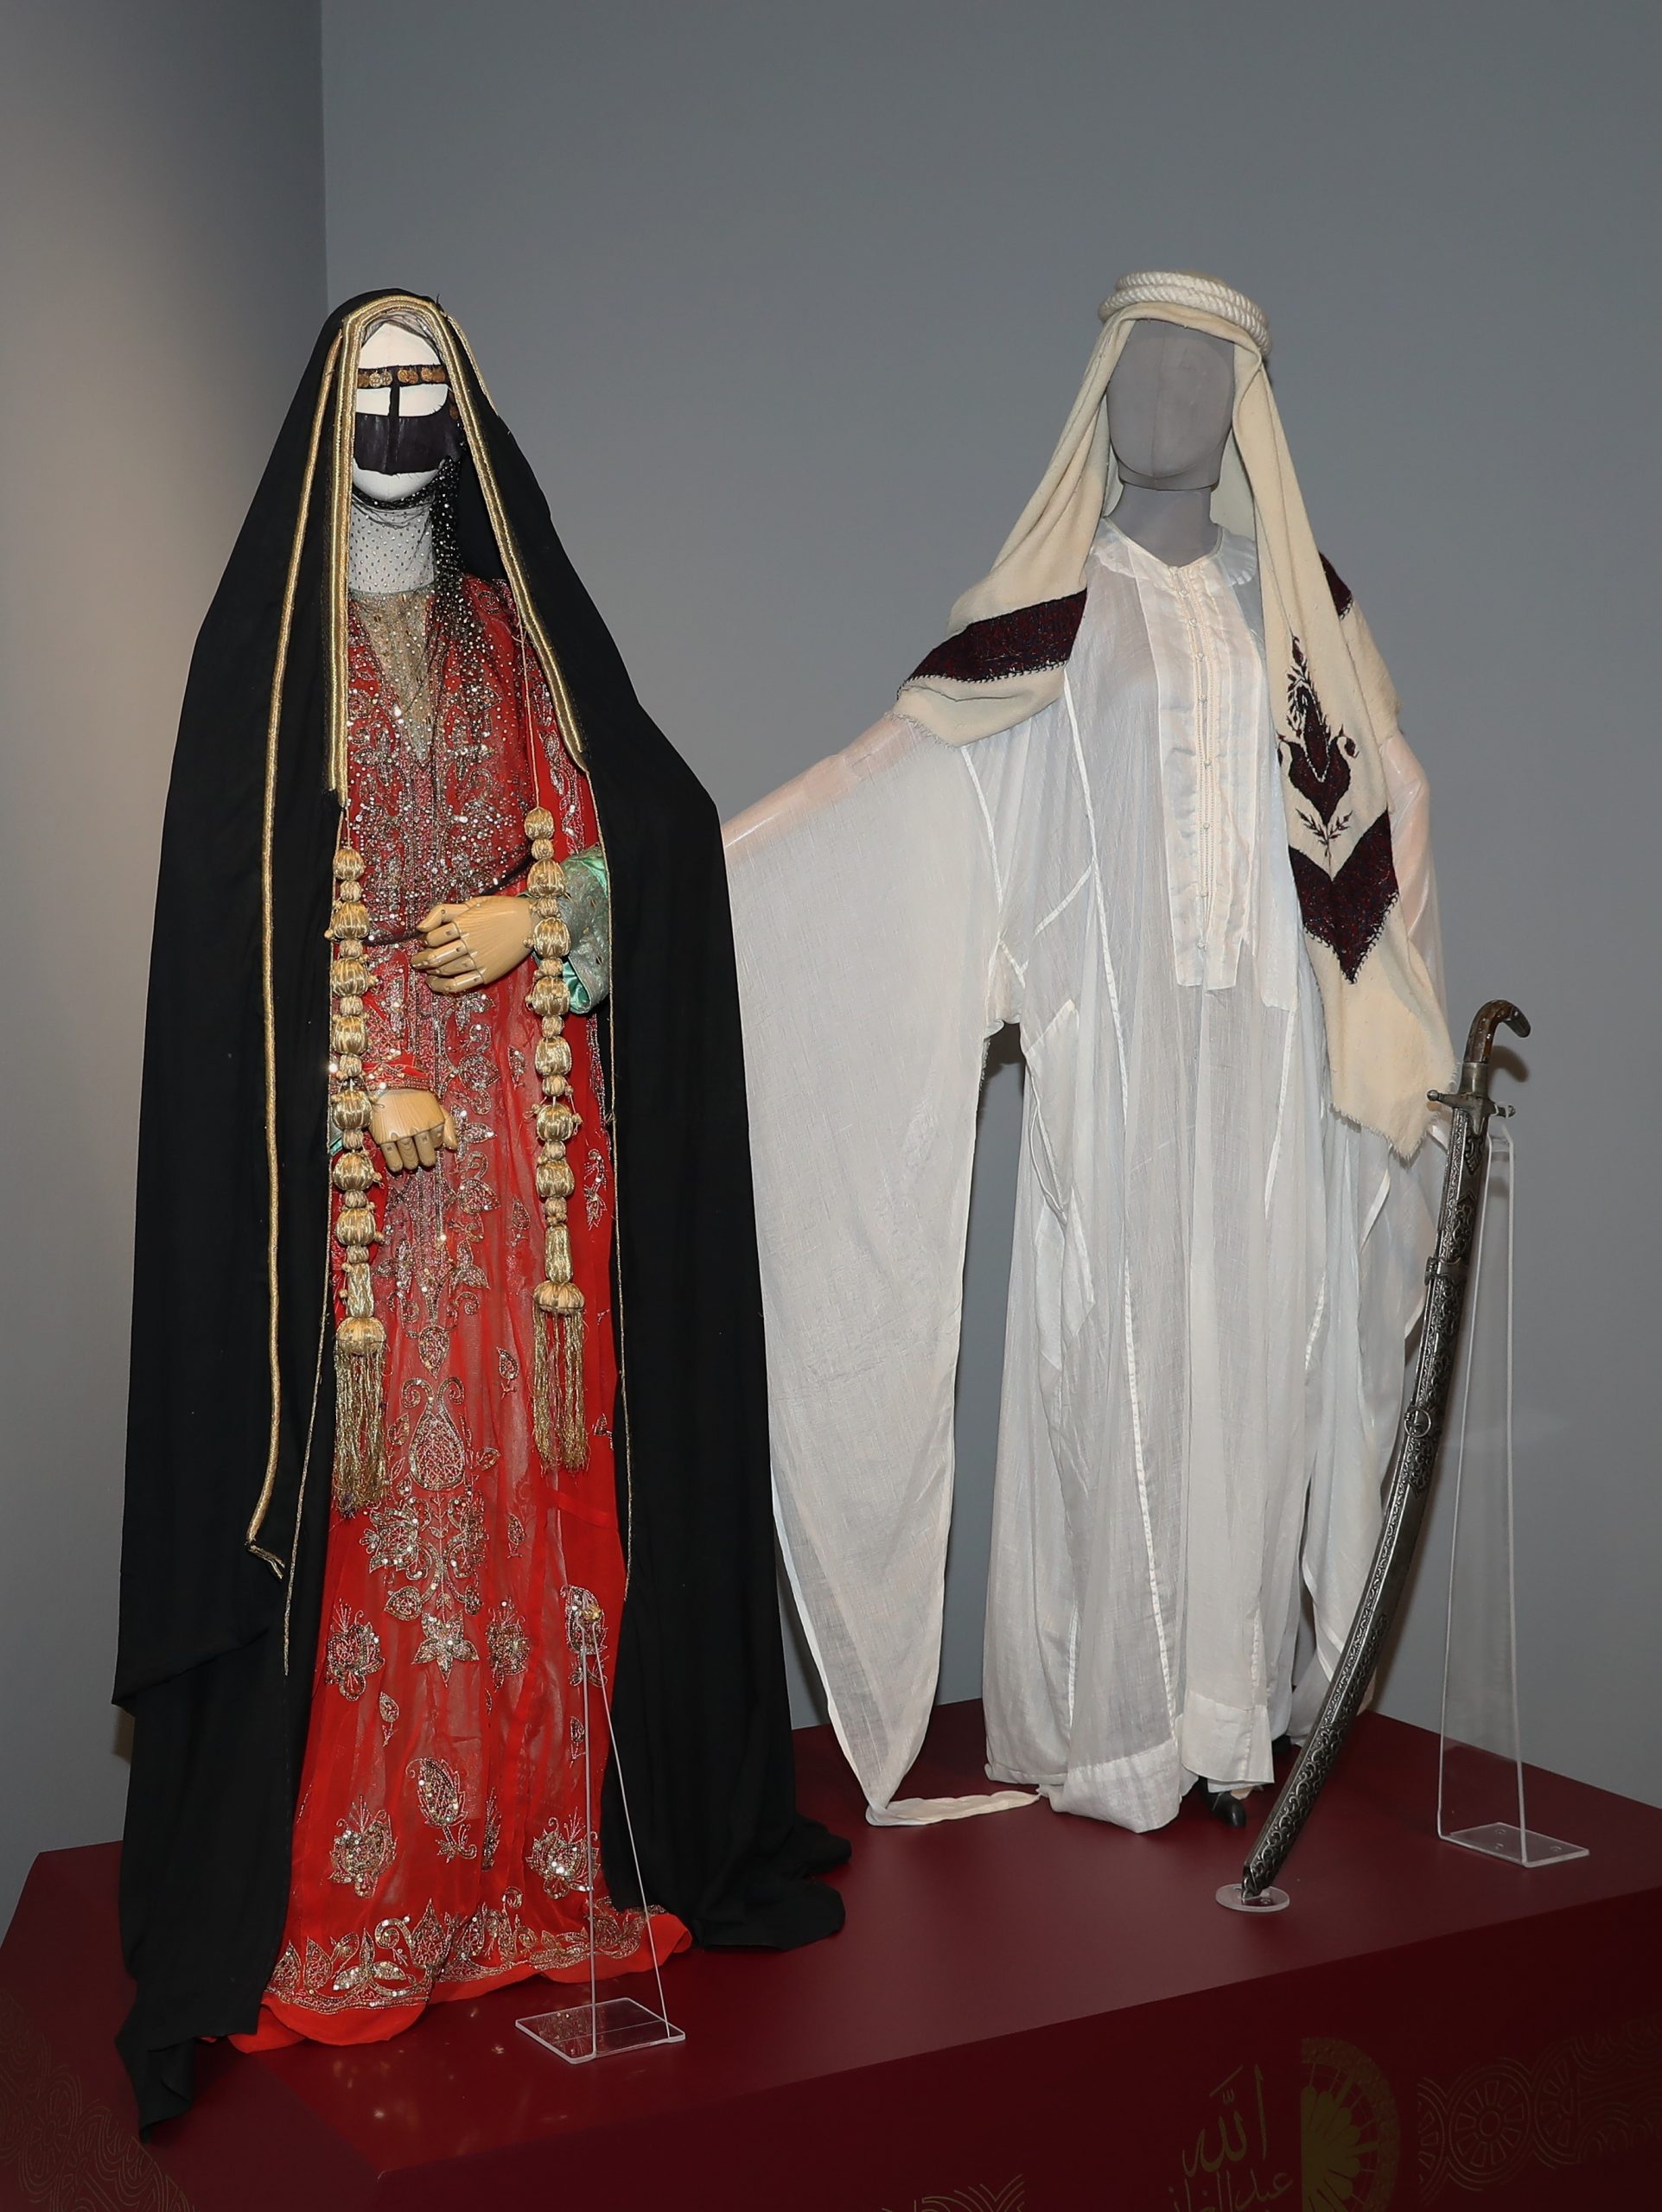 Treasures from Heritage exhibition opens in Katara